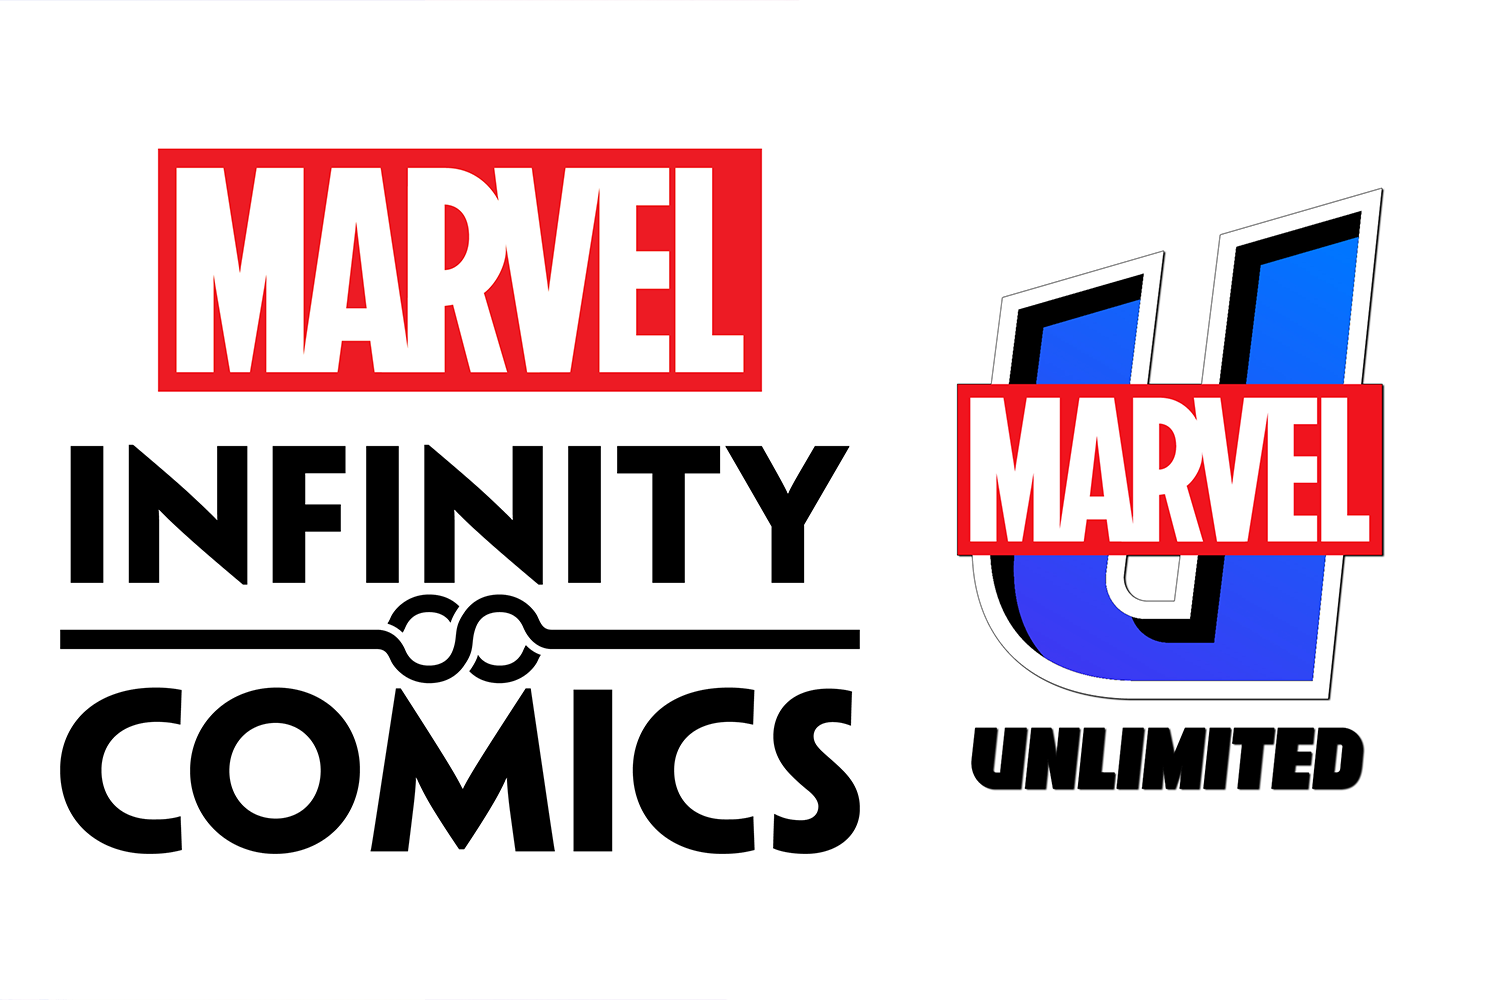 Marvel Unlimited app gets massive update, adding new Infinity Comics